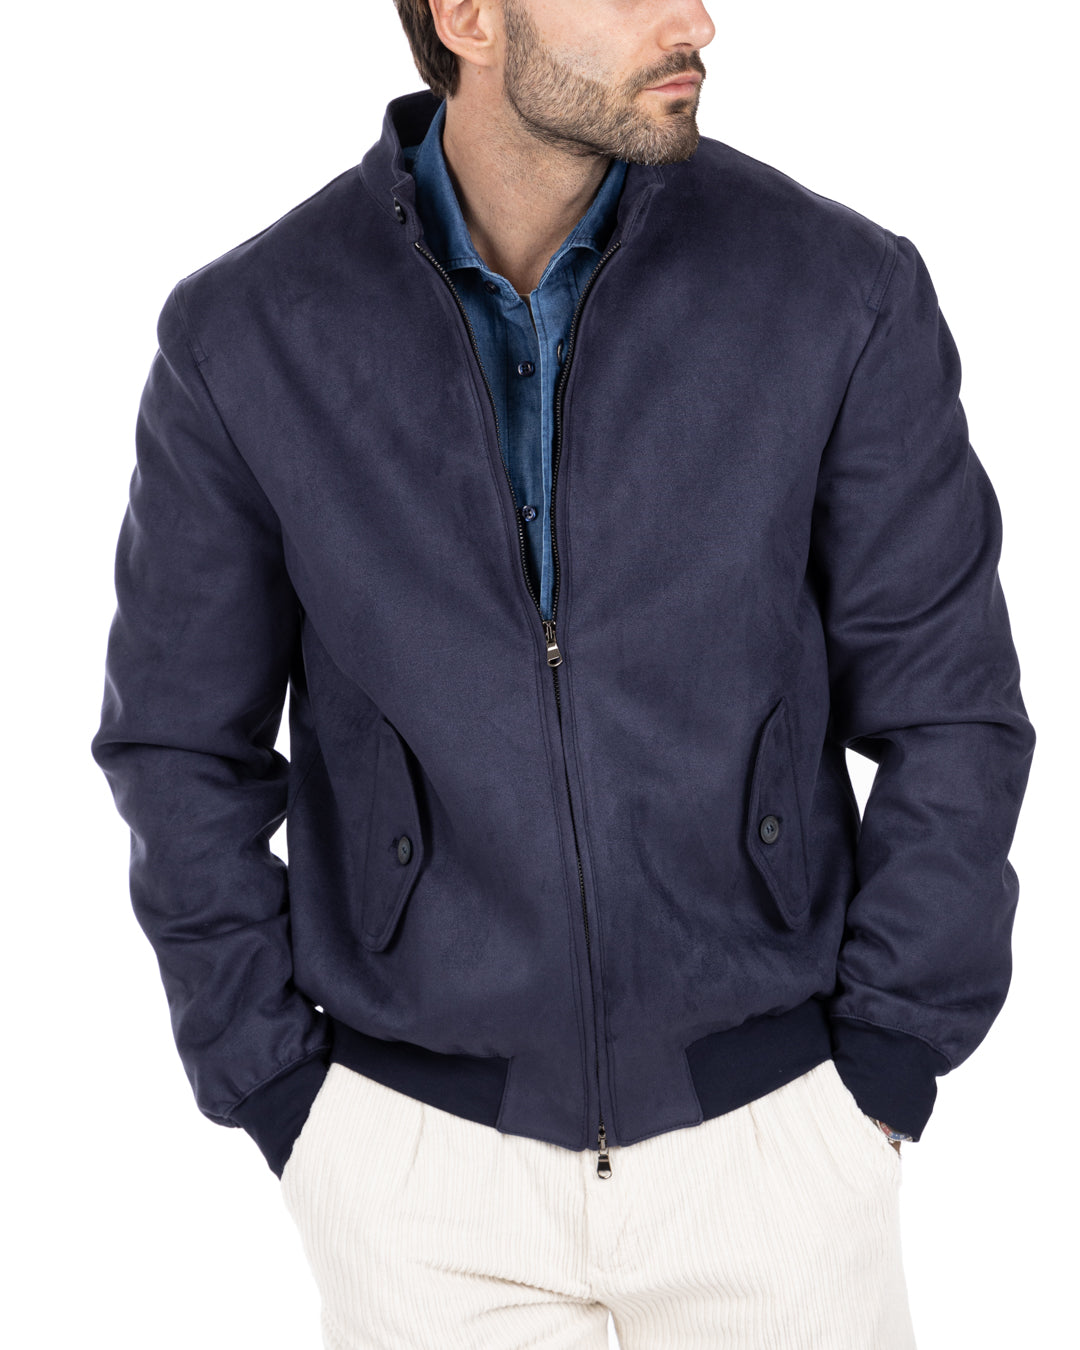 Alis - blue eco-suede jacket with zip